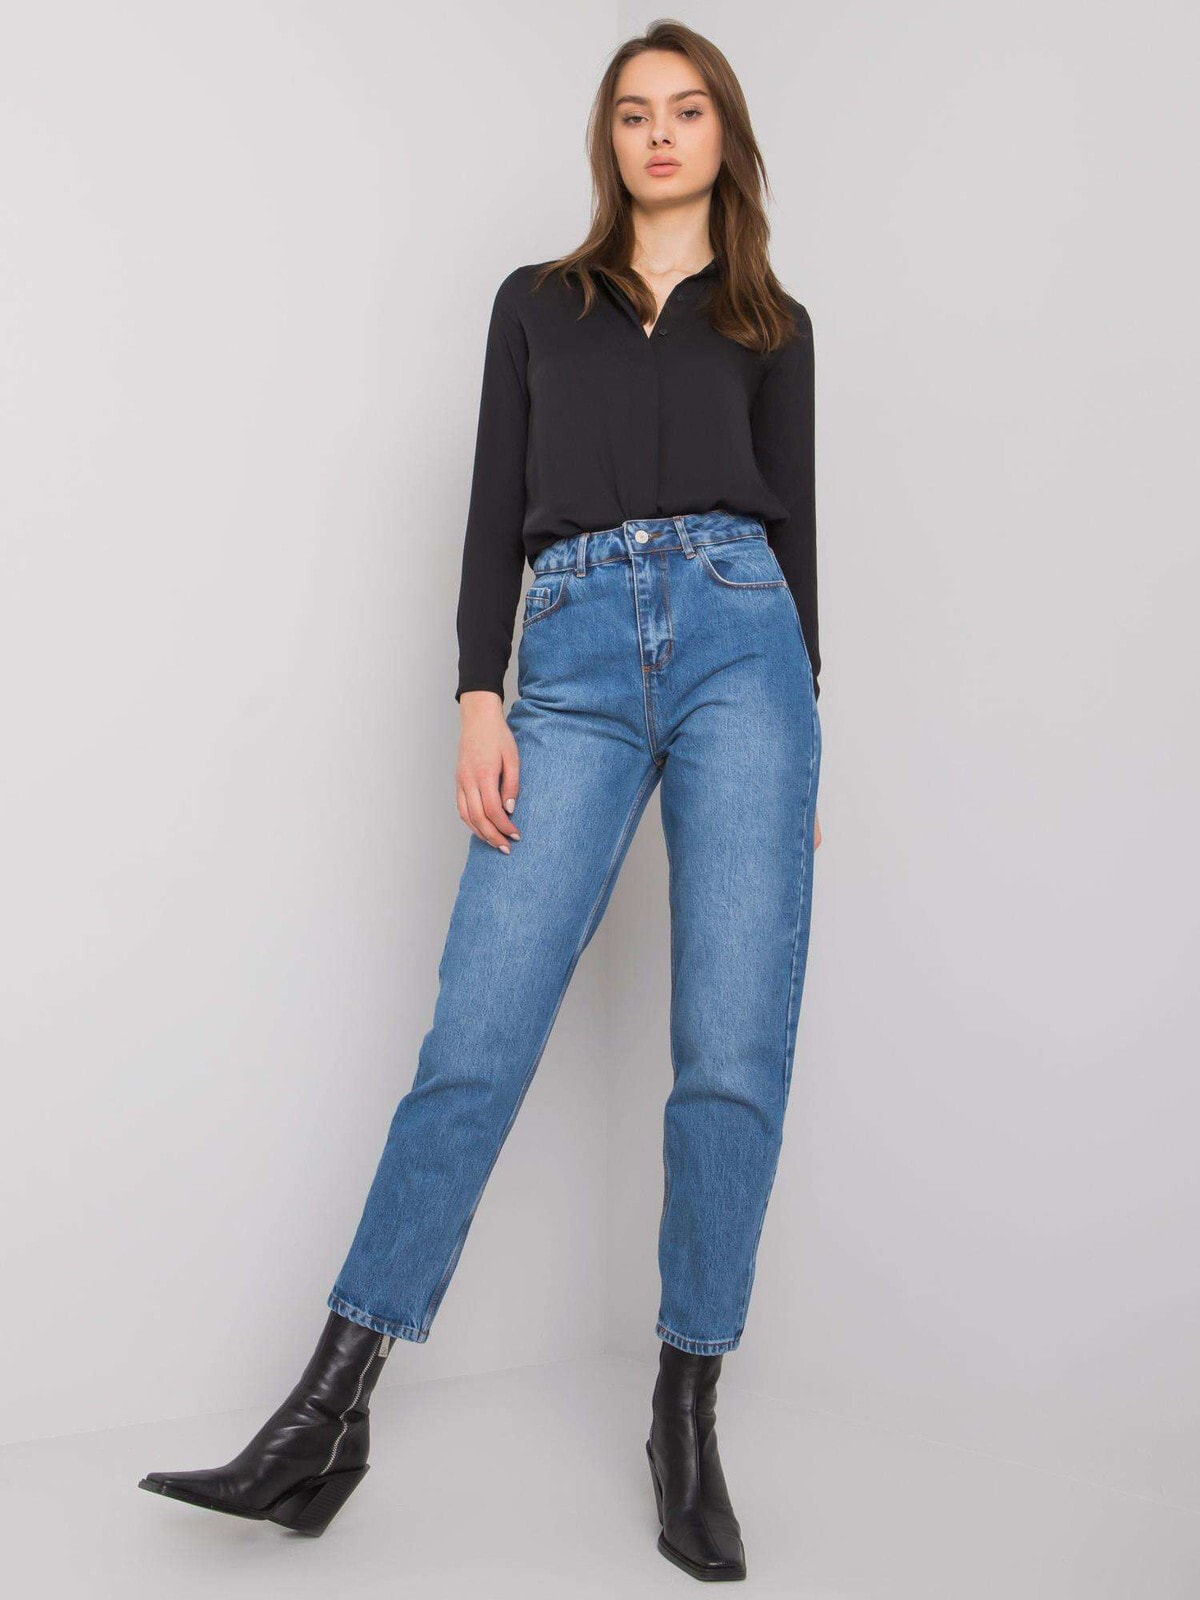 Женские синие джинсы Factory Price Spodnie jeans-MR-SP-5104-2.21-niebieski